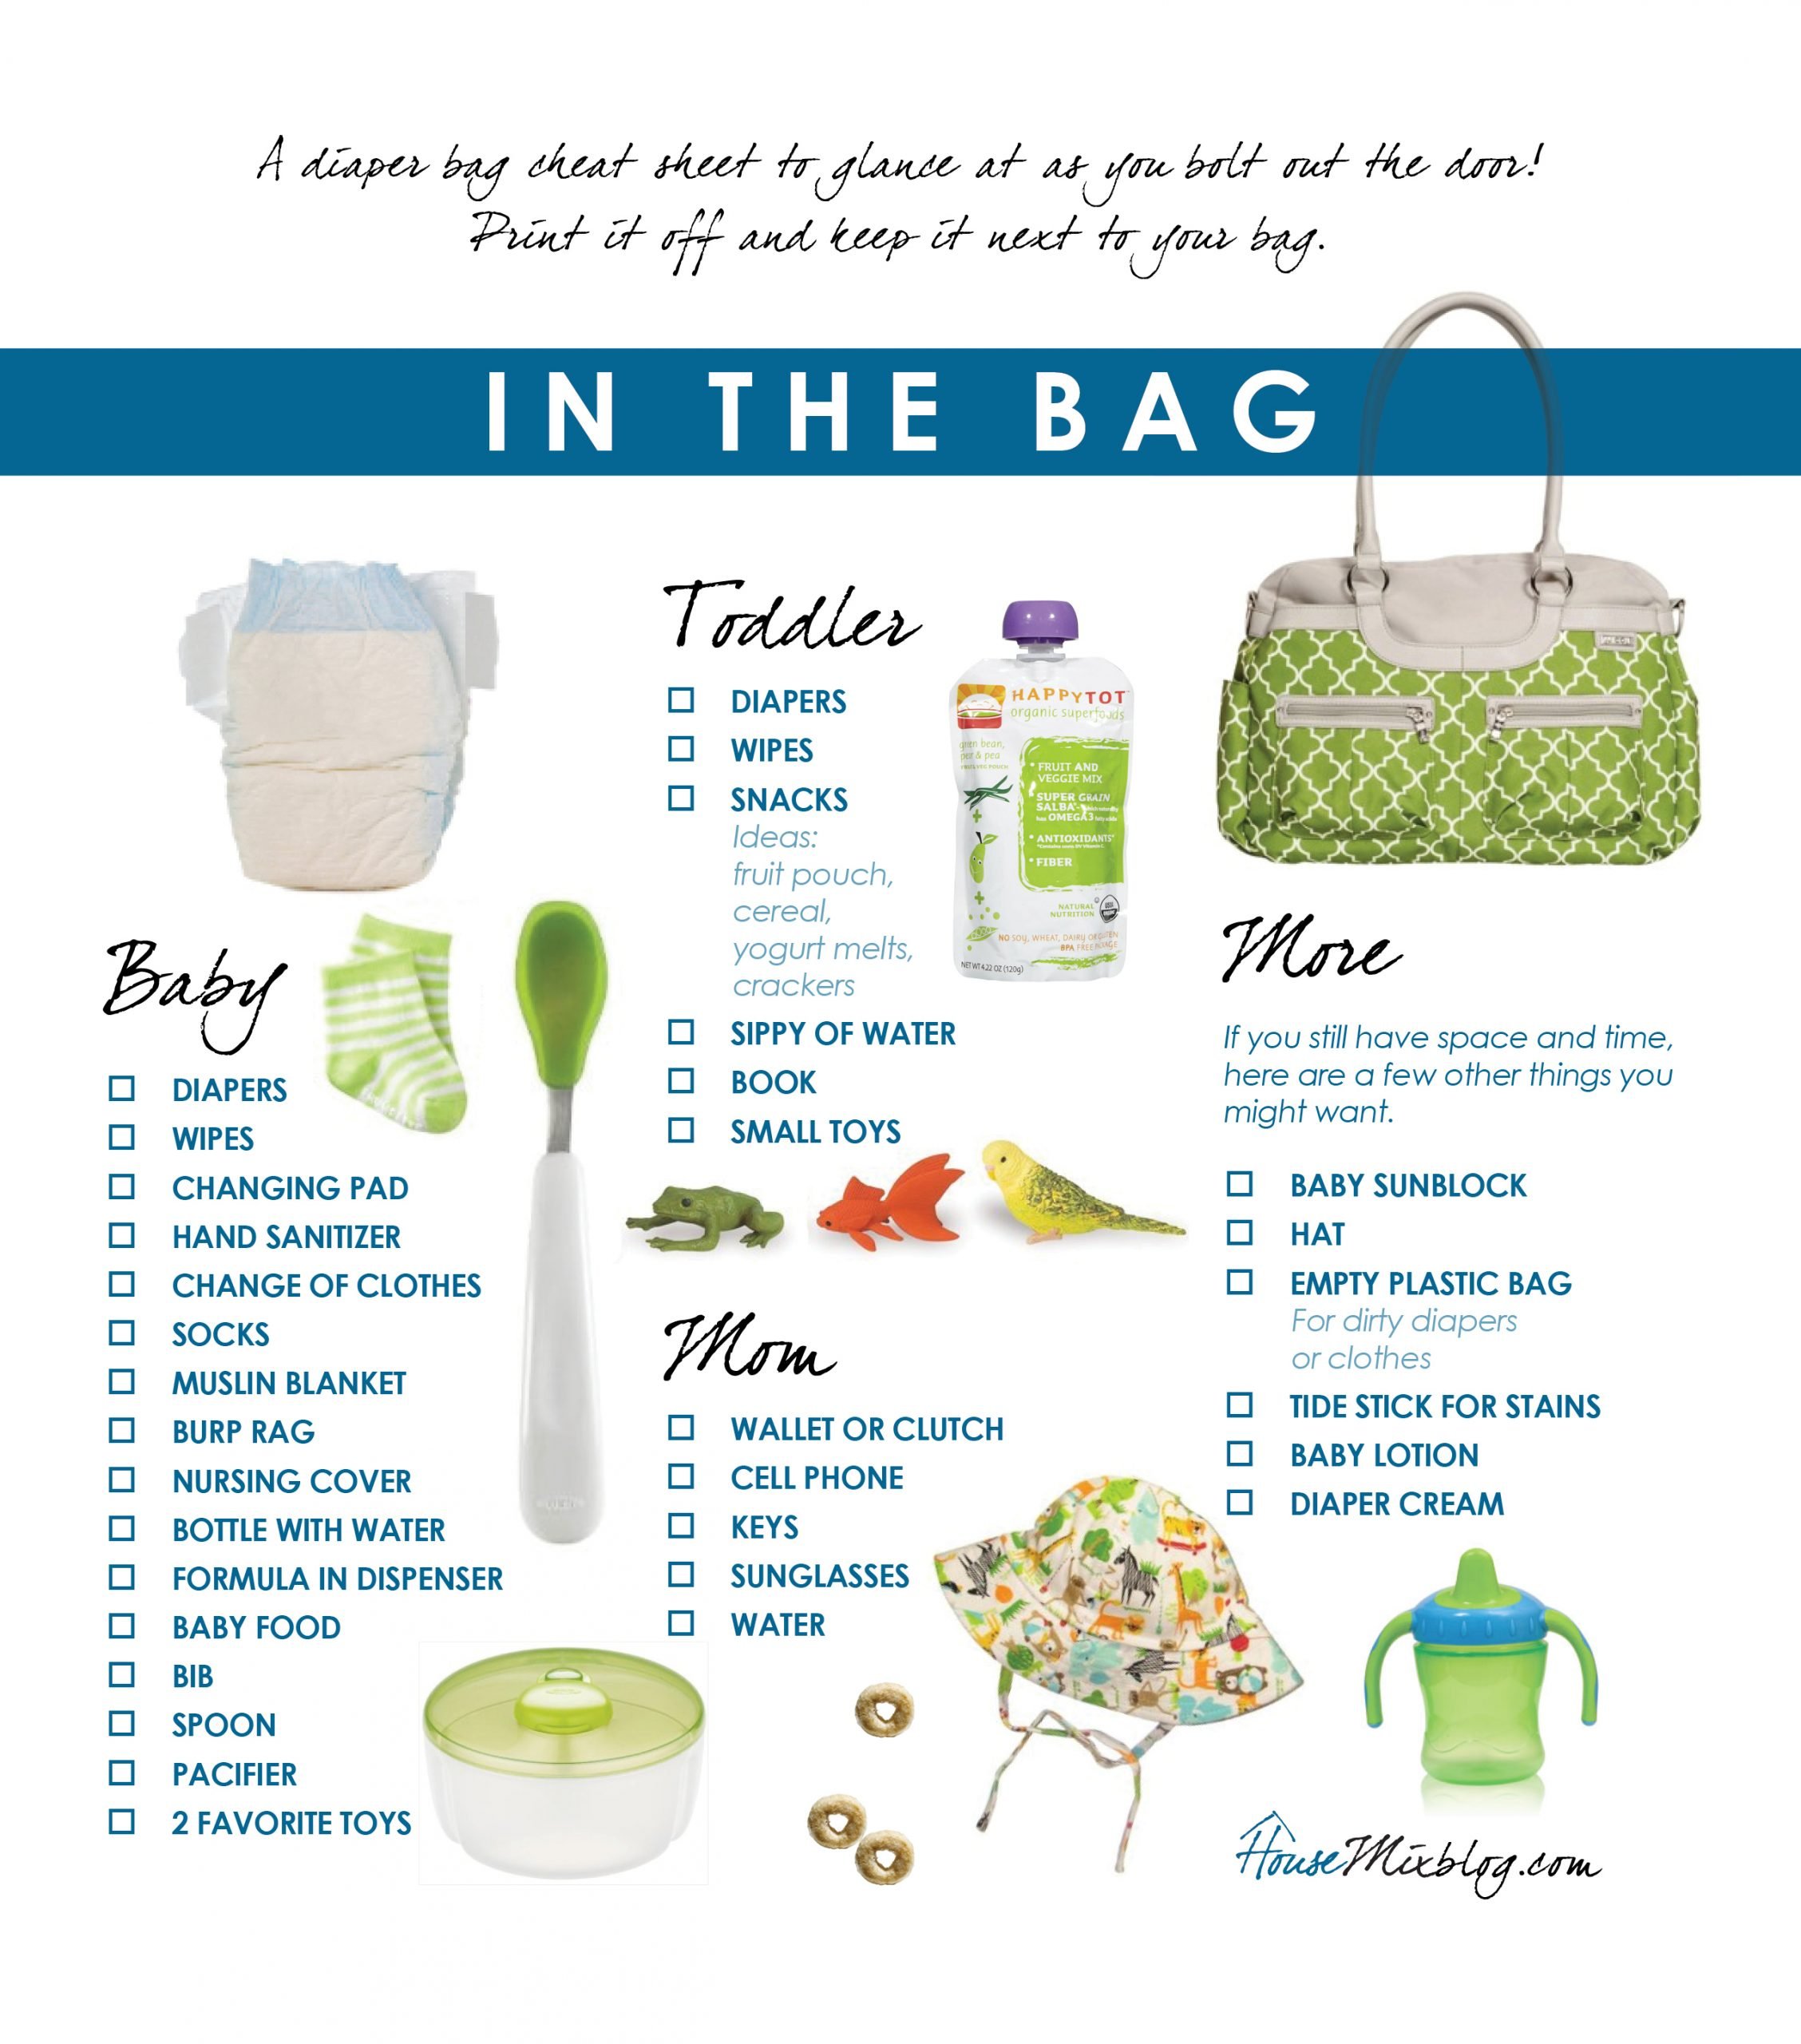 Diaper bag checklist â House Mix